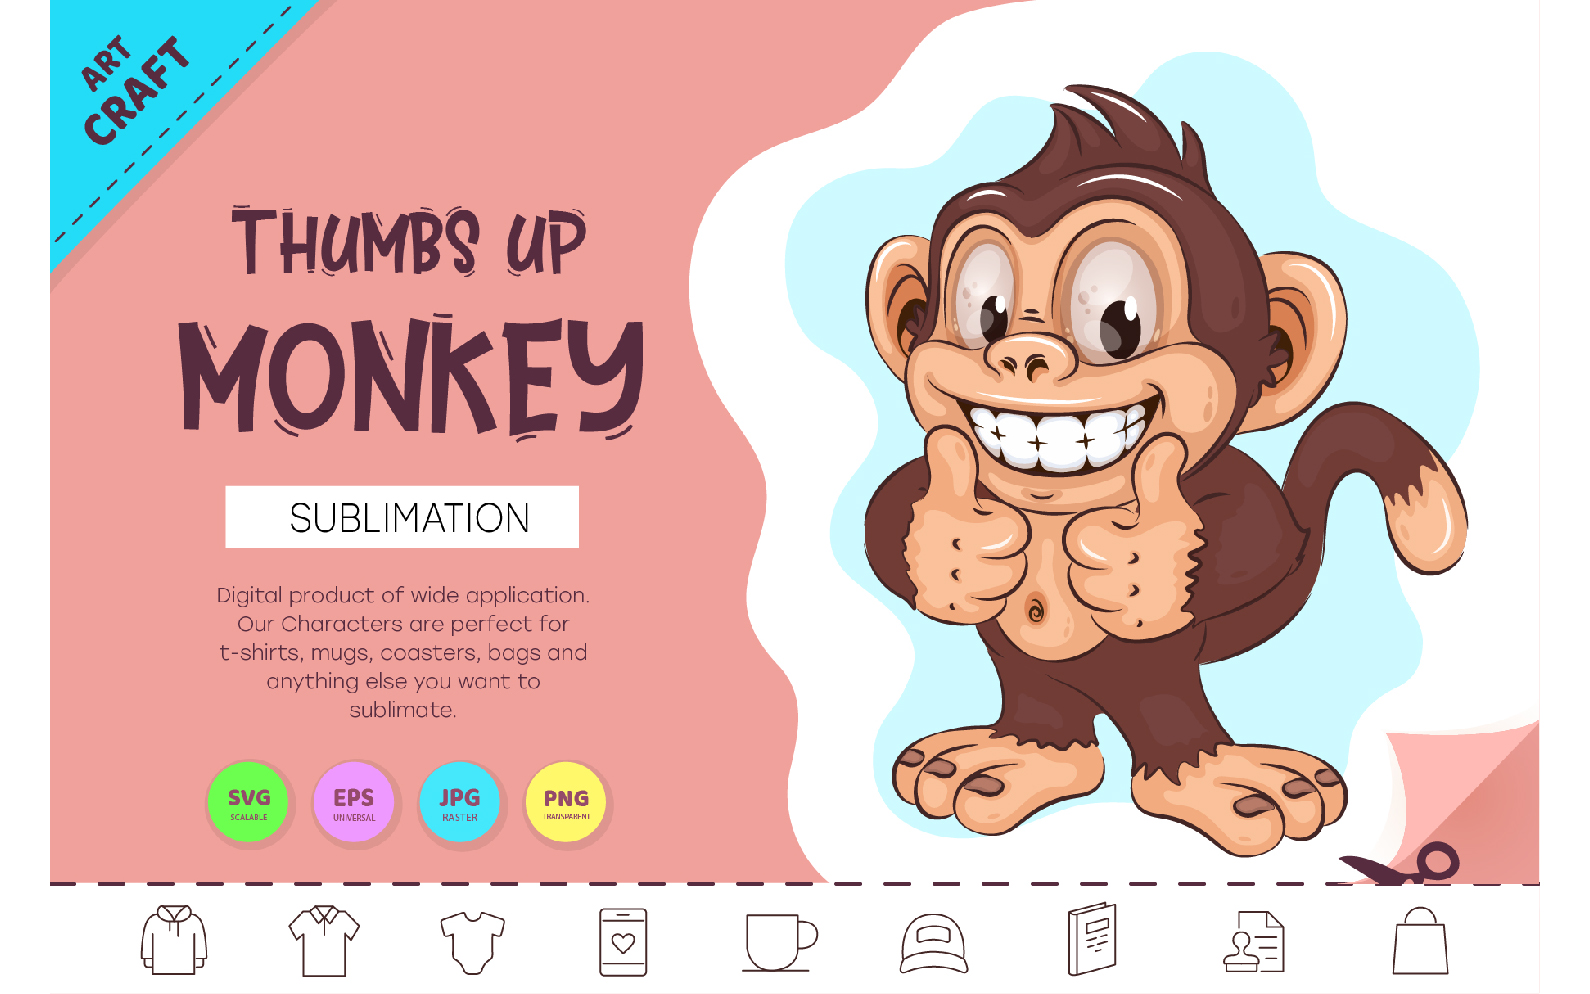 Thumbs up Monkey Cartoon. Crafting, Sublimation.